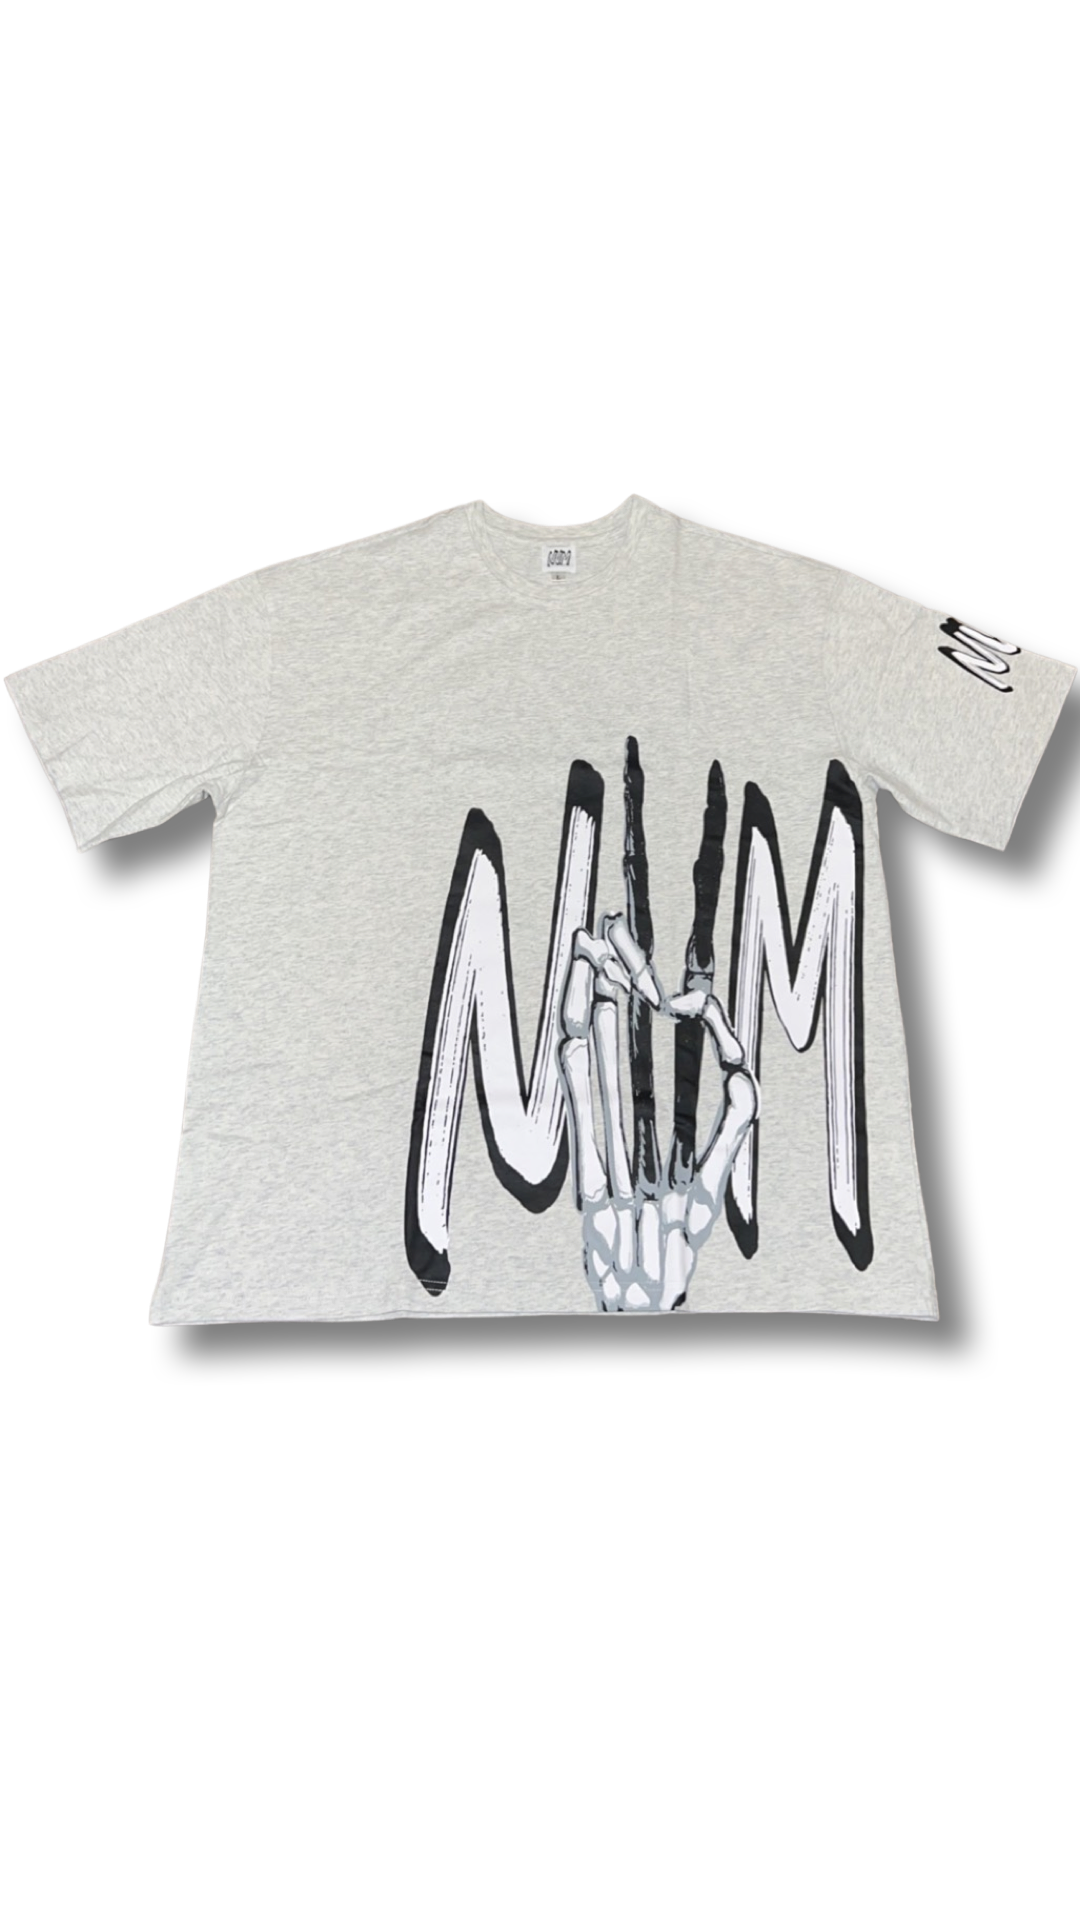 (Szn1) (Light grey) T-shirt